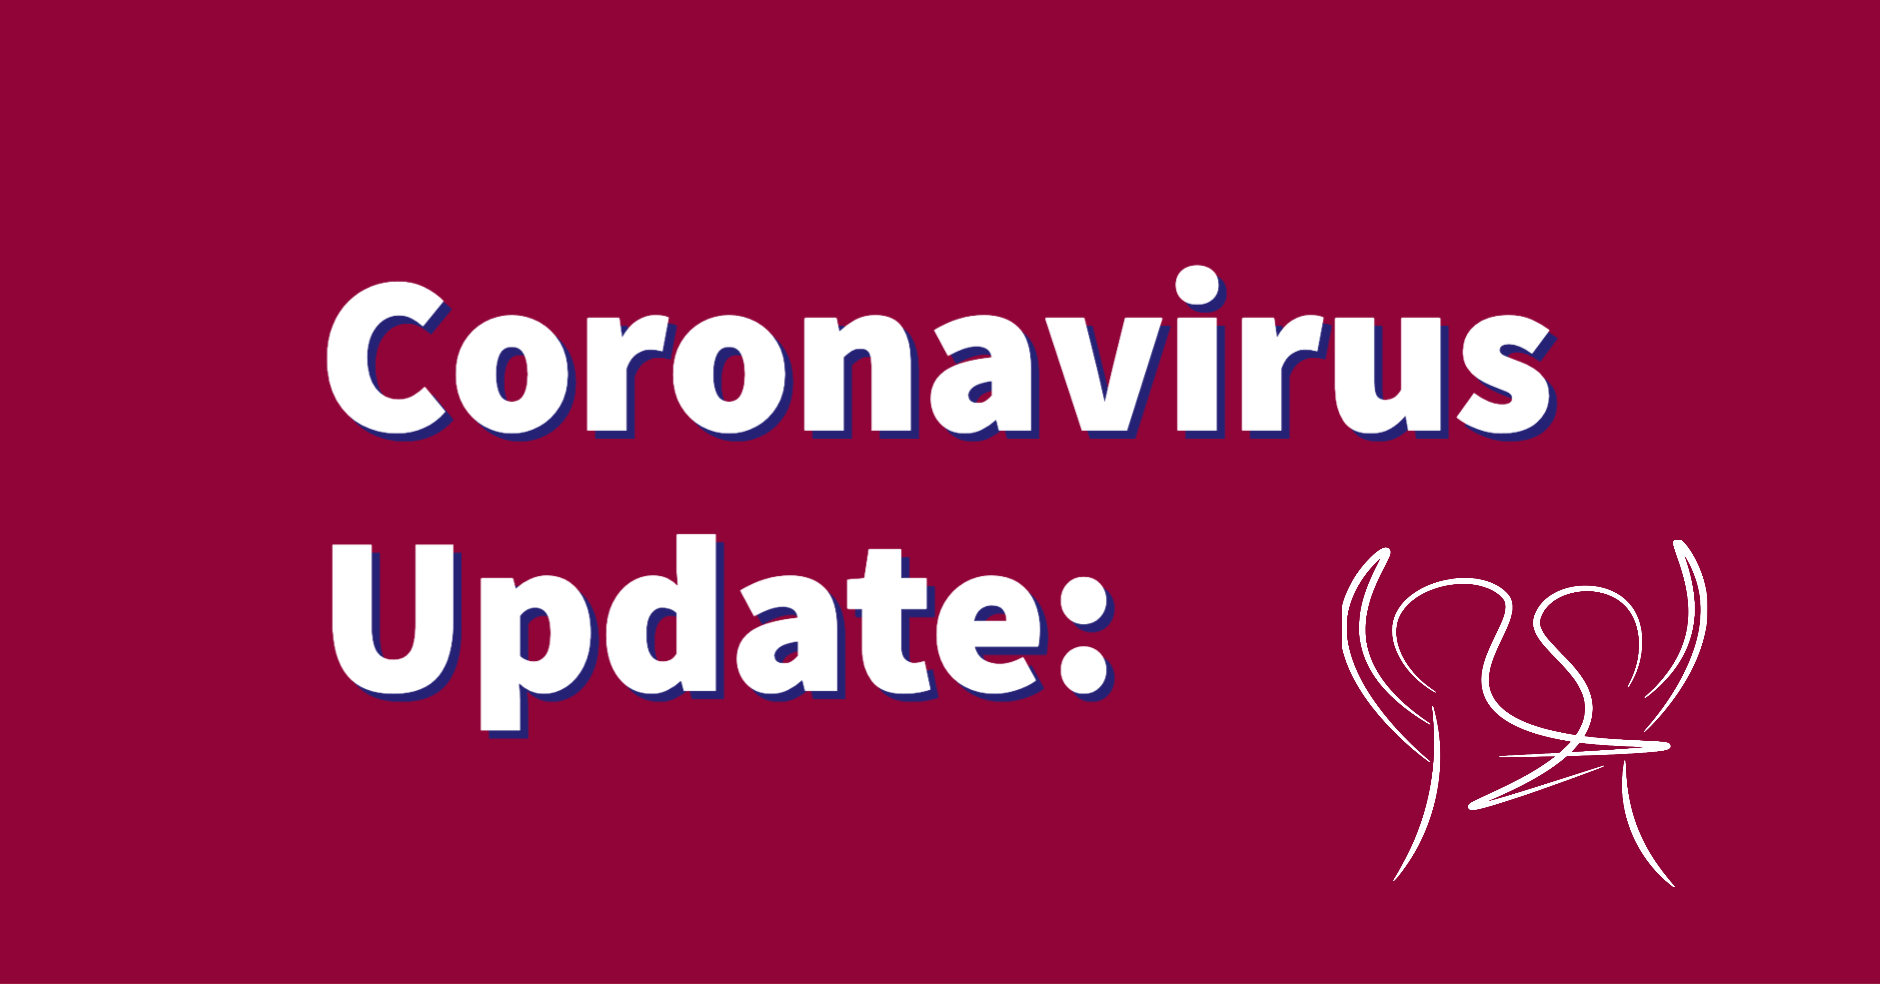 Edgarley Assisted Living Coronavirus Update July 27